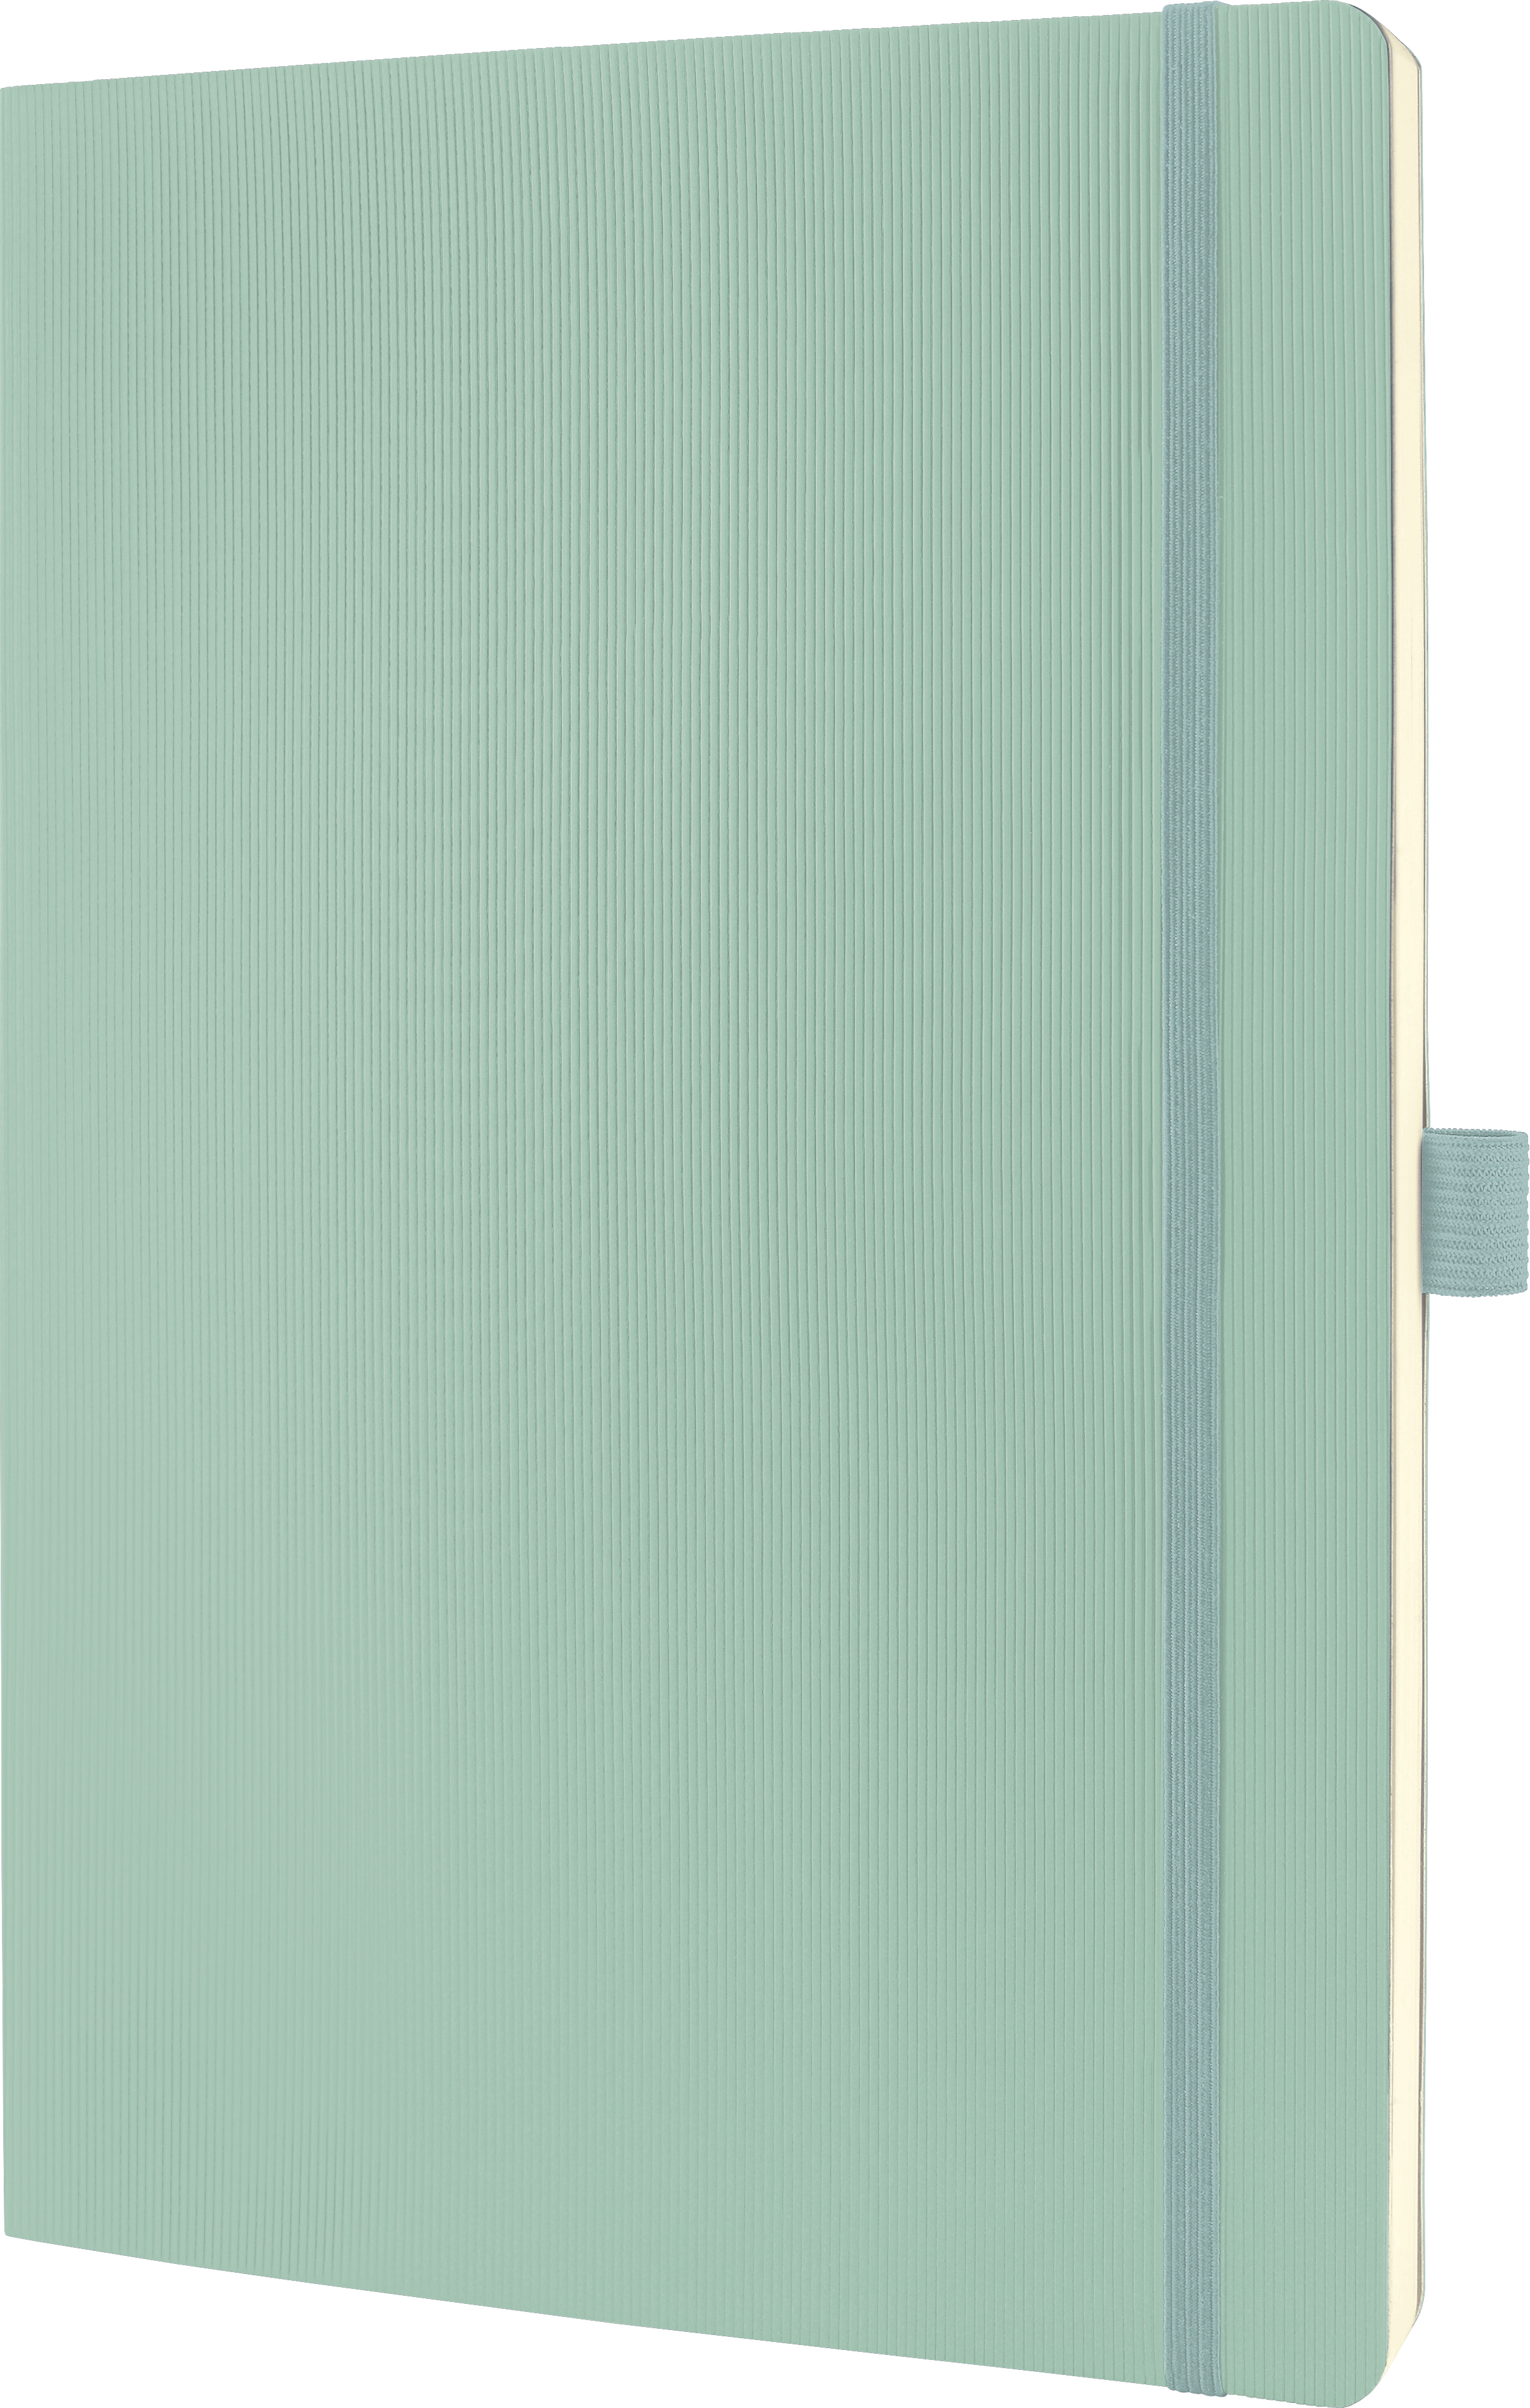 CONCEPTUM Carnet de notes A4 CO335 mint green, ligné 194 pages mint green, ligné 194 pages